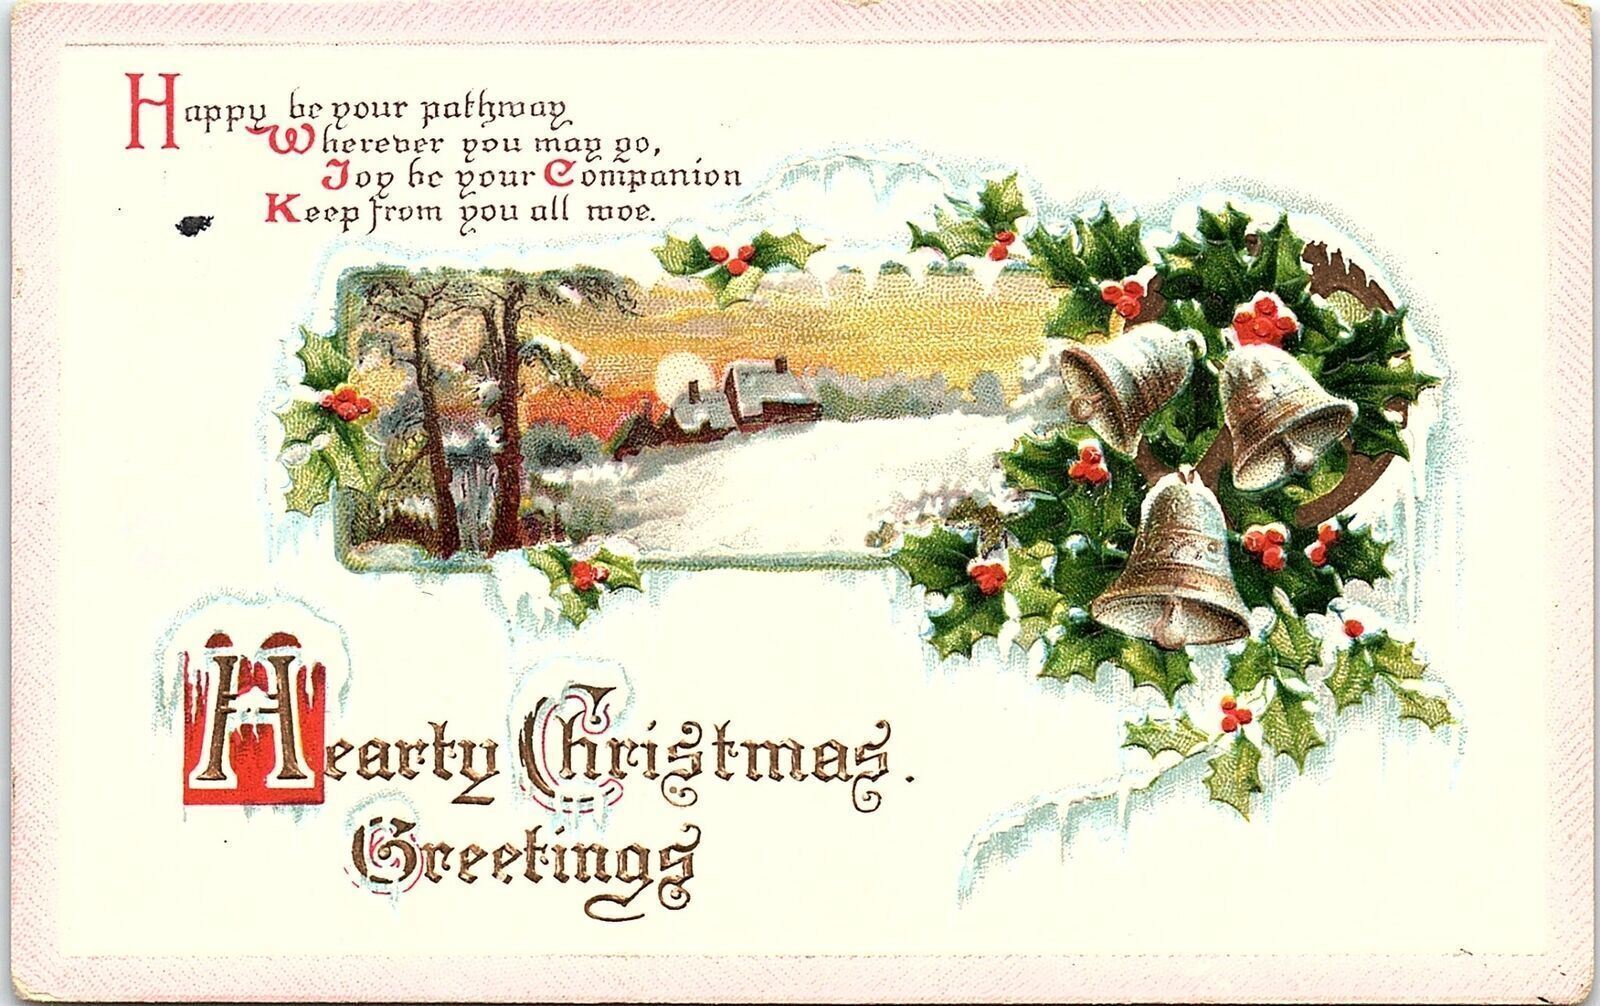 c1915 HEARTY CHRISTMAS GREETINGS SCENIC ALMA MISSOURI EMBOSSED POSTCARD 39-257